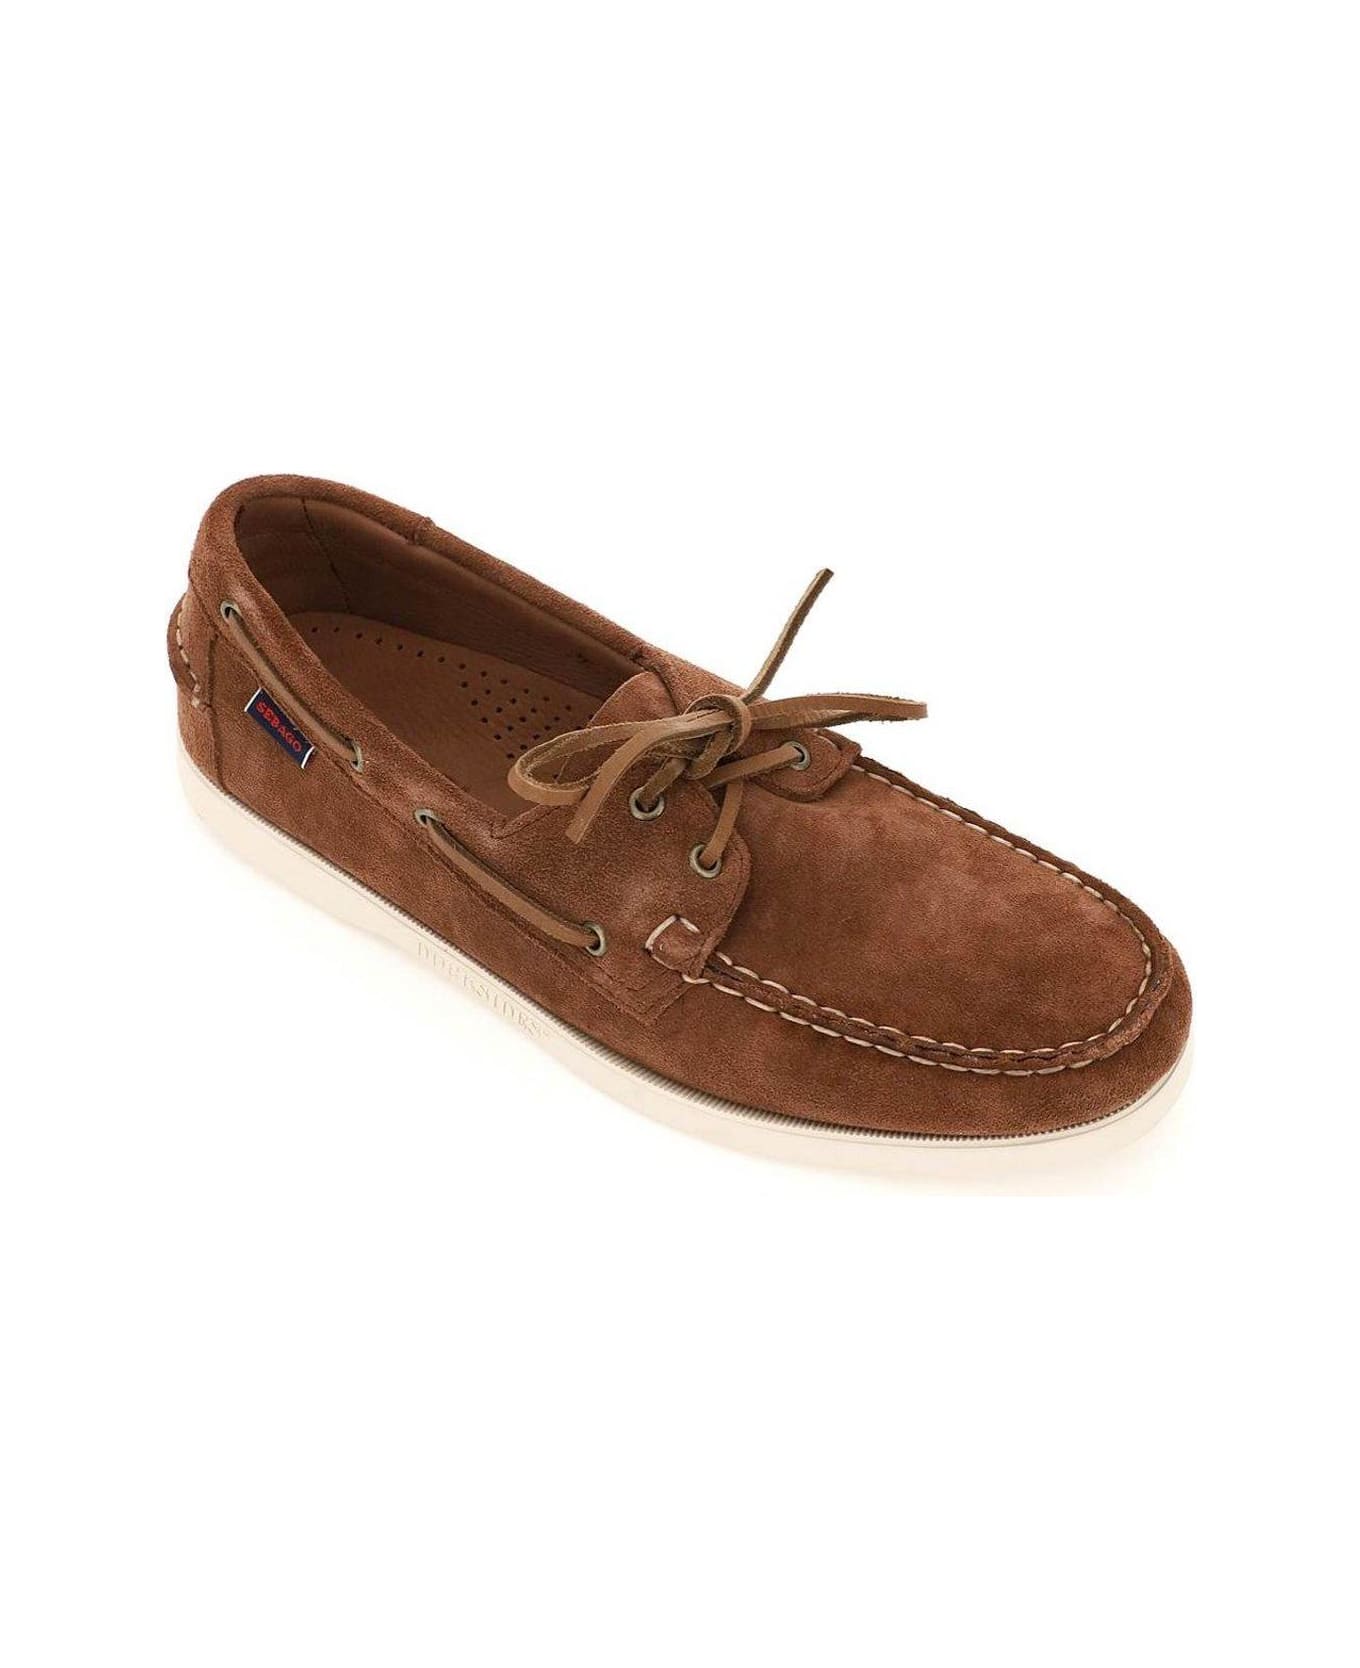 Sebago Lace-up Round Toe Boat Shoes - Dark Brown